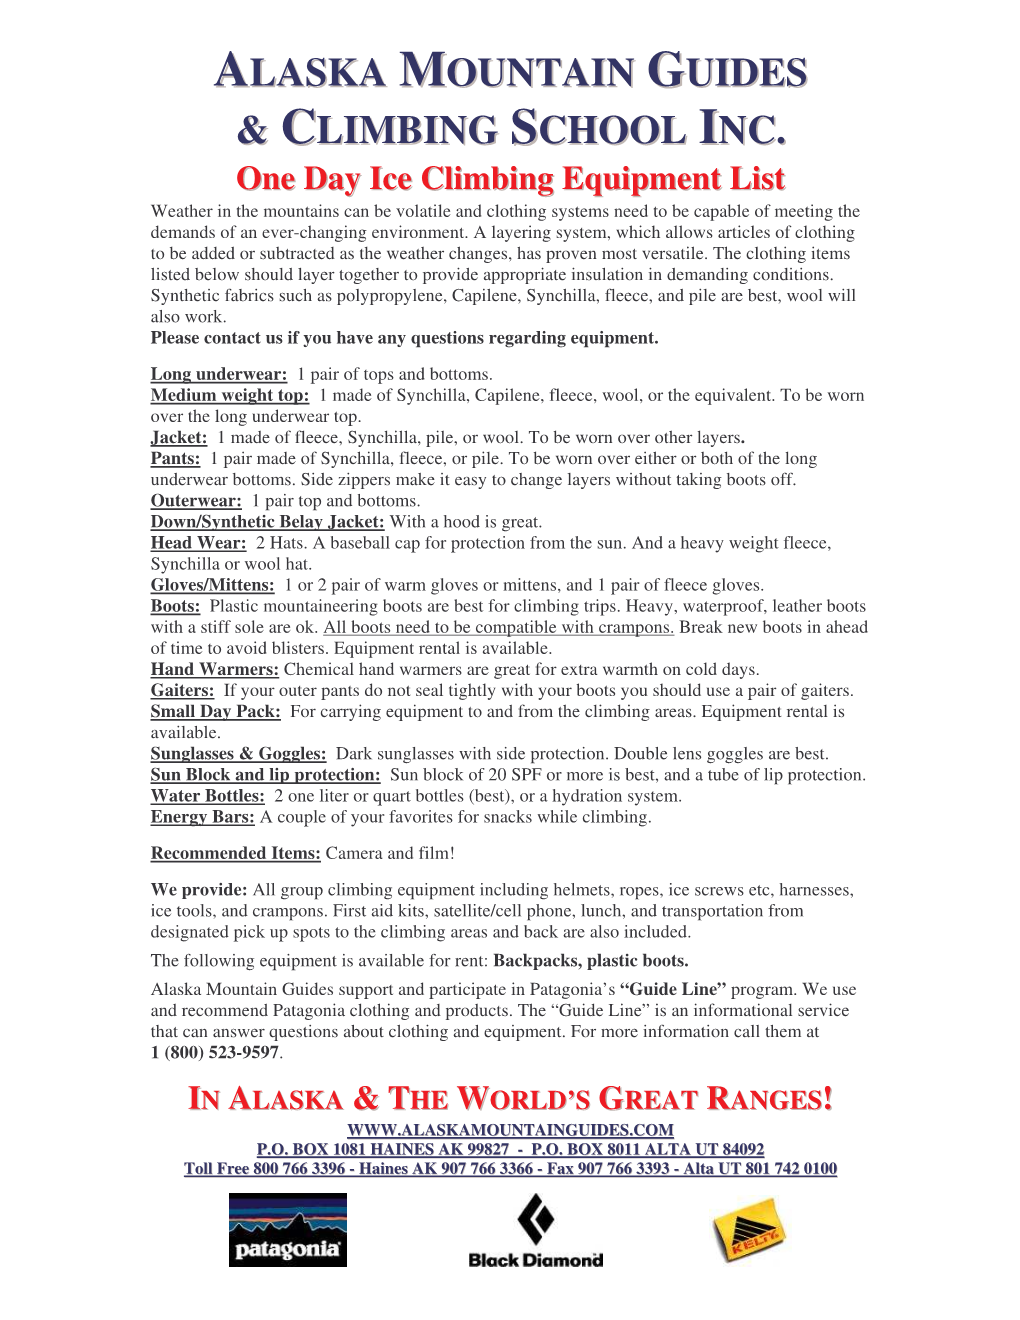 One Day Ice Climbing Equipment List